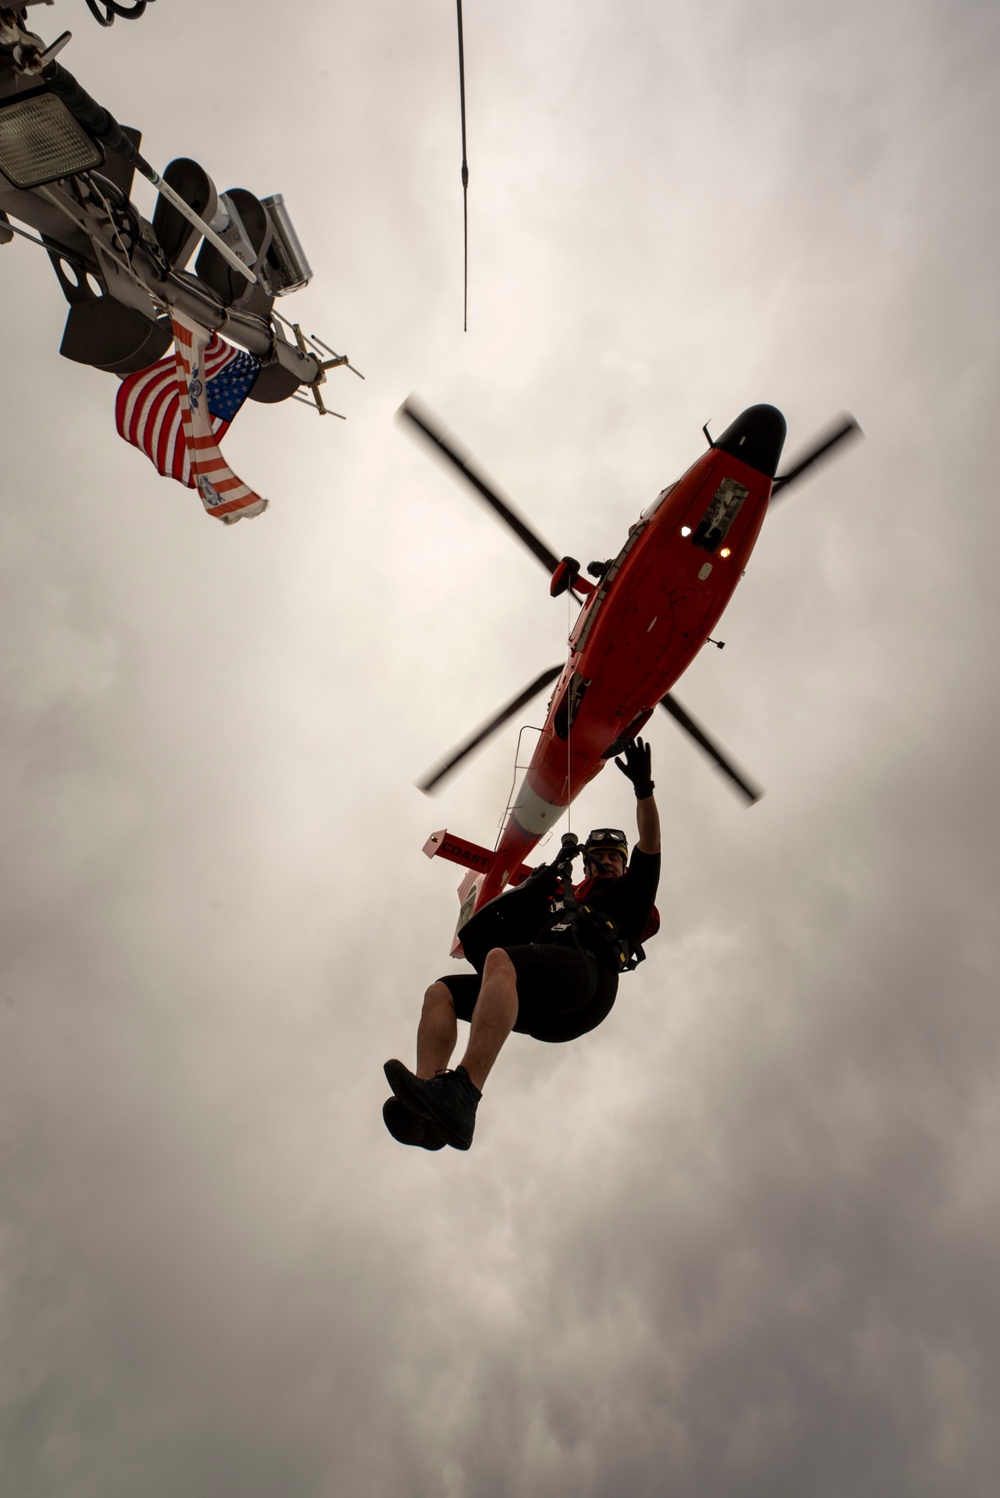 Coast Guard Air Station Houston conducts training